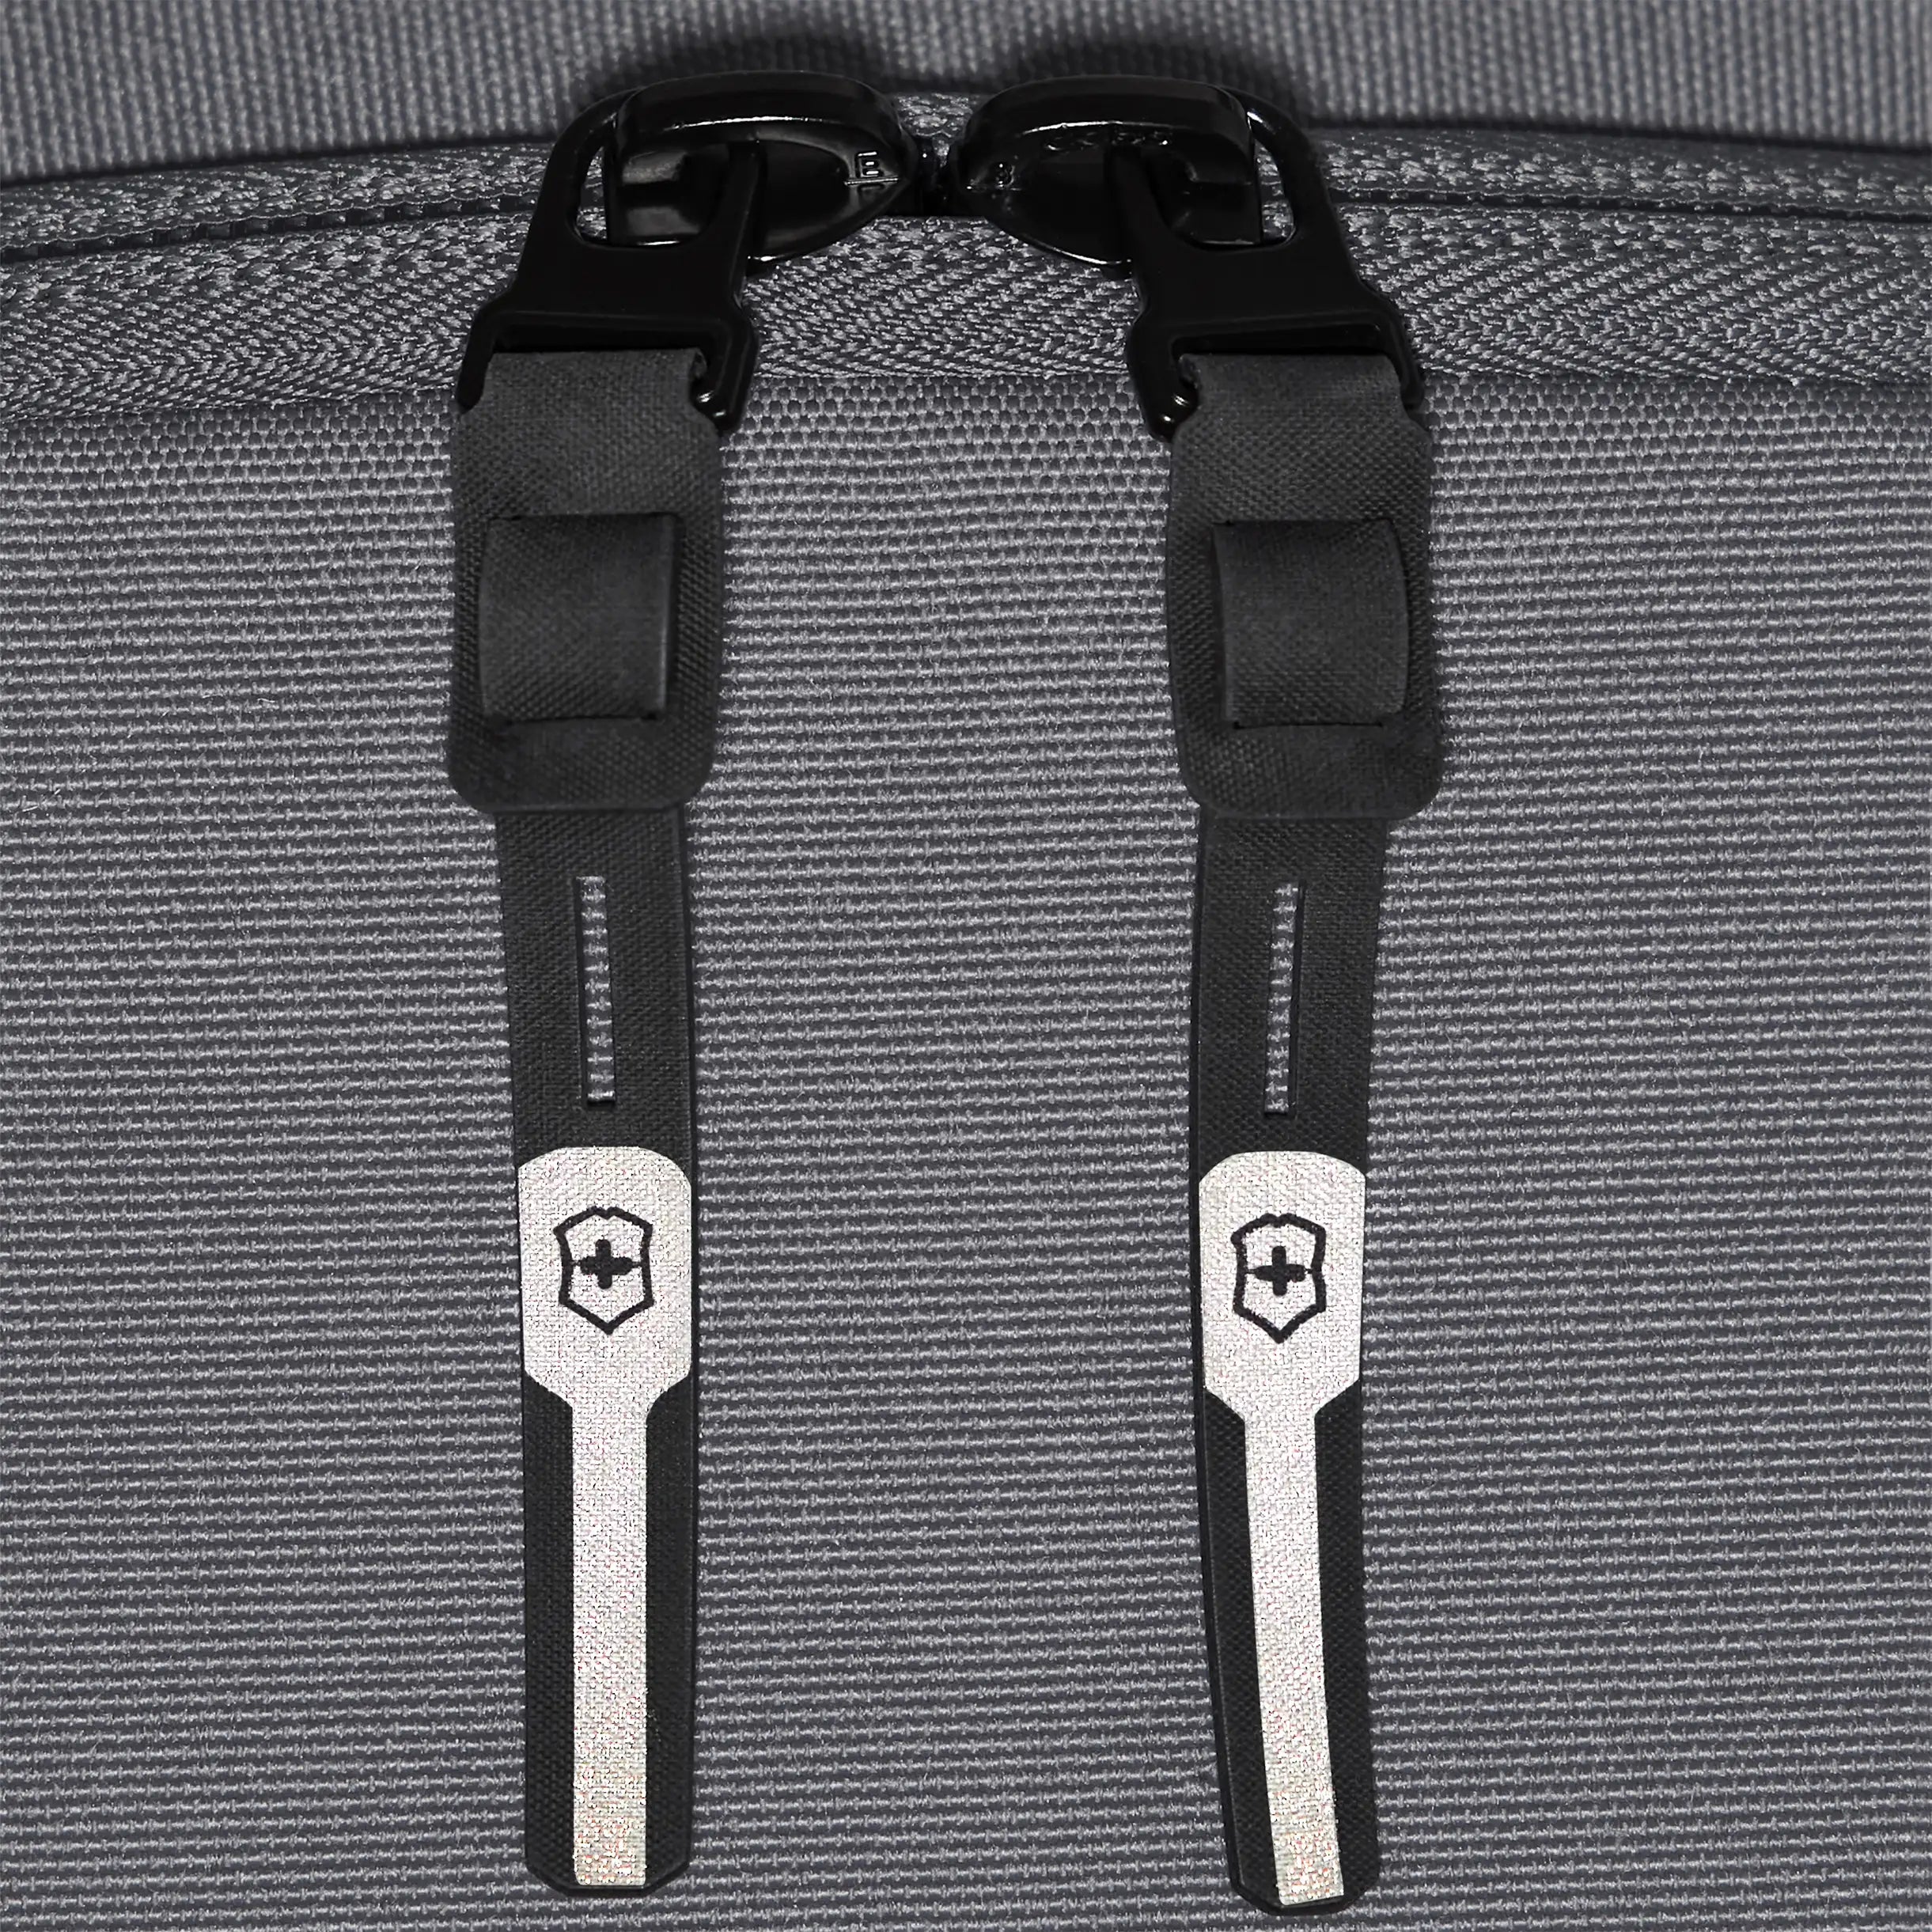 Victorinox Touring 2.0 City Daypack Backpack 43 cm - Black